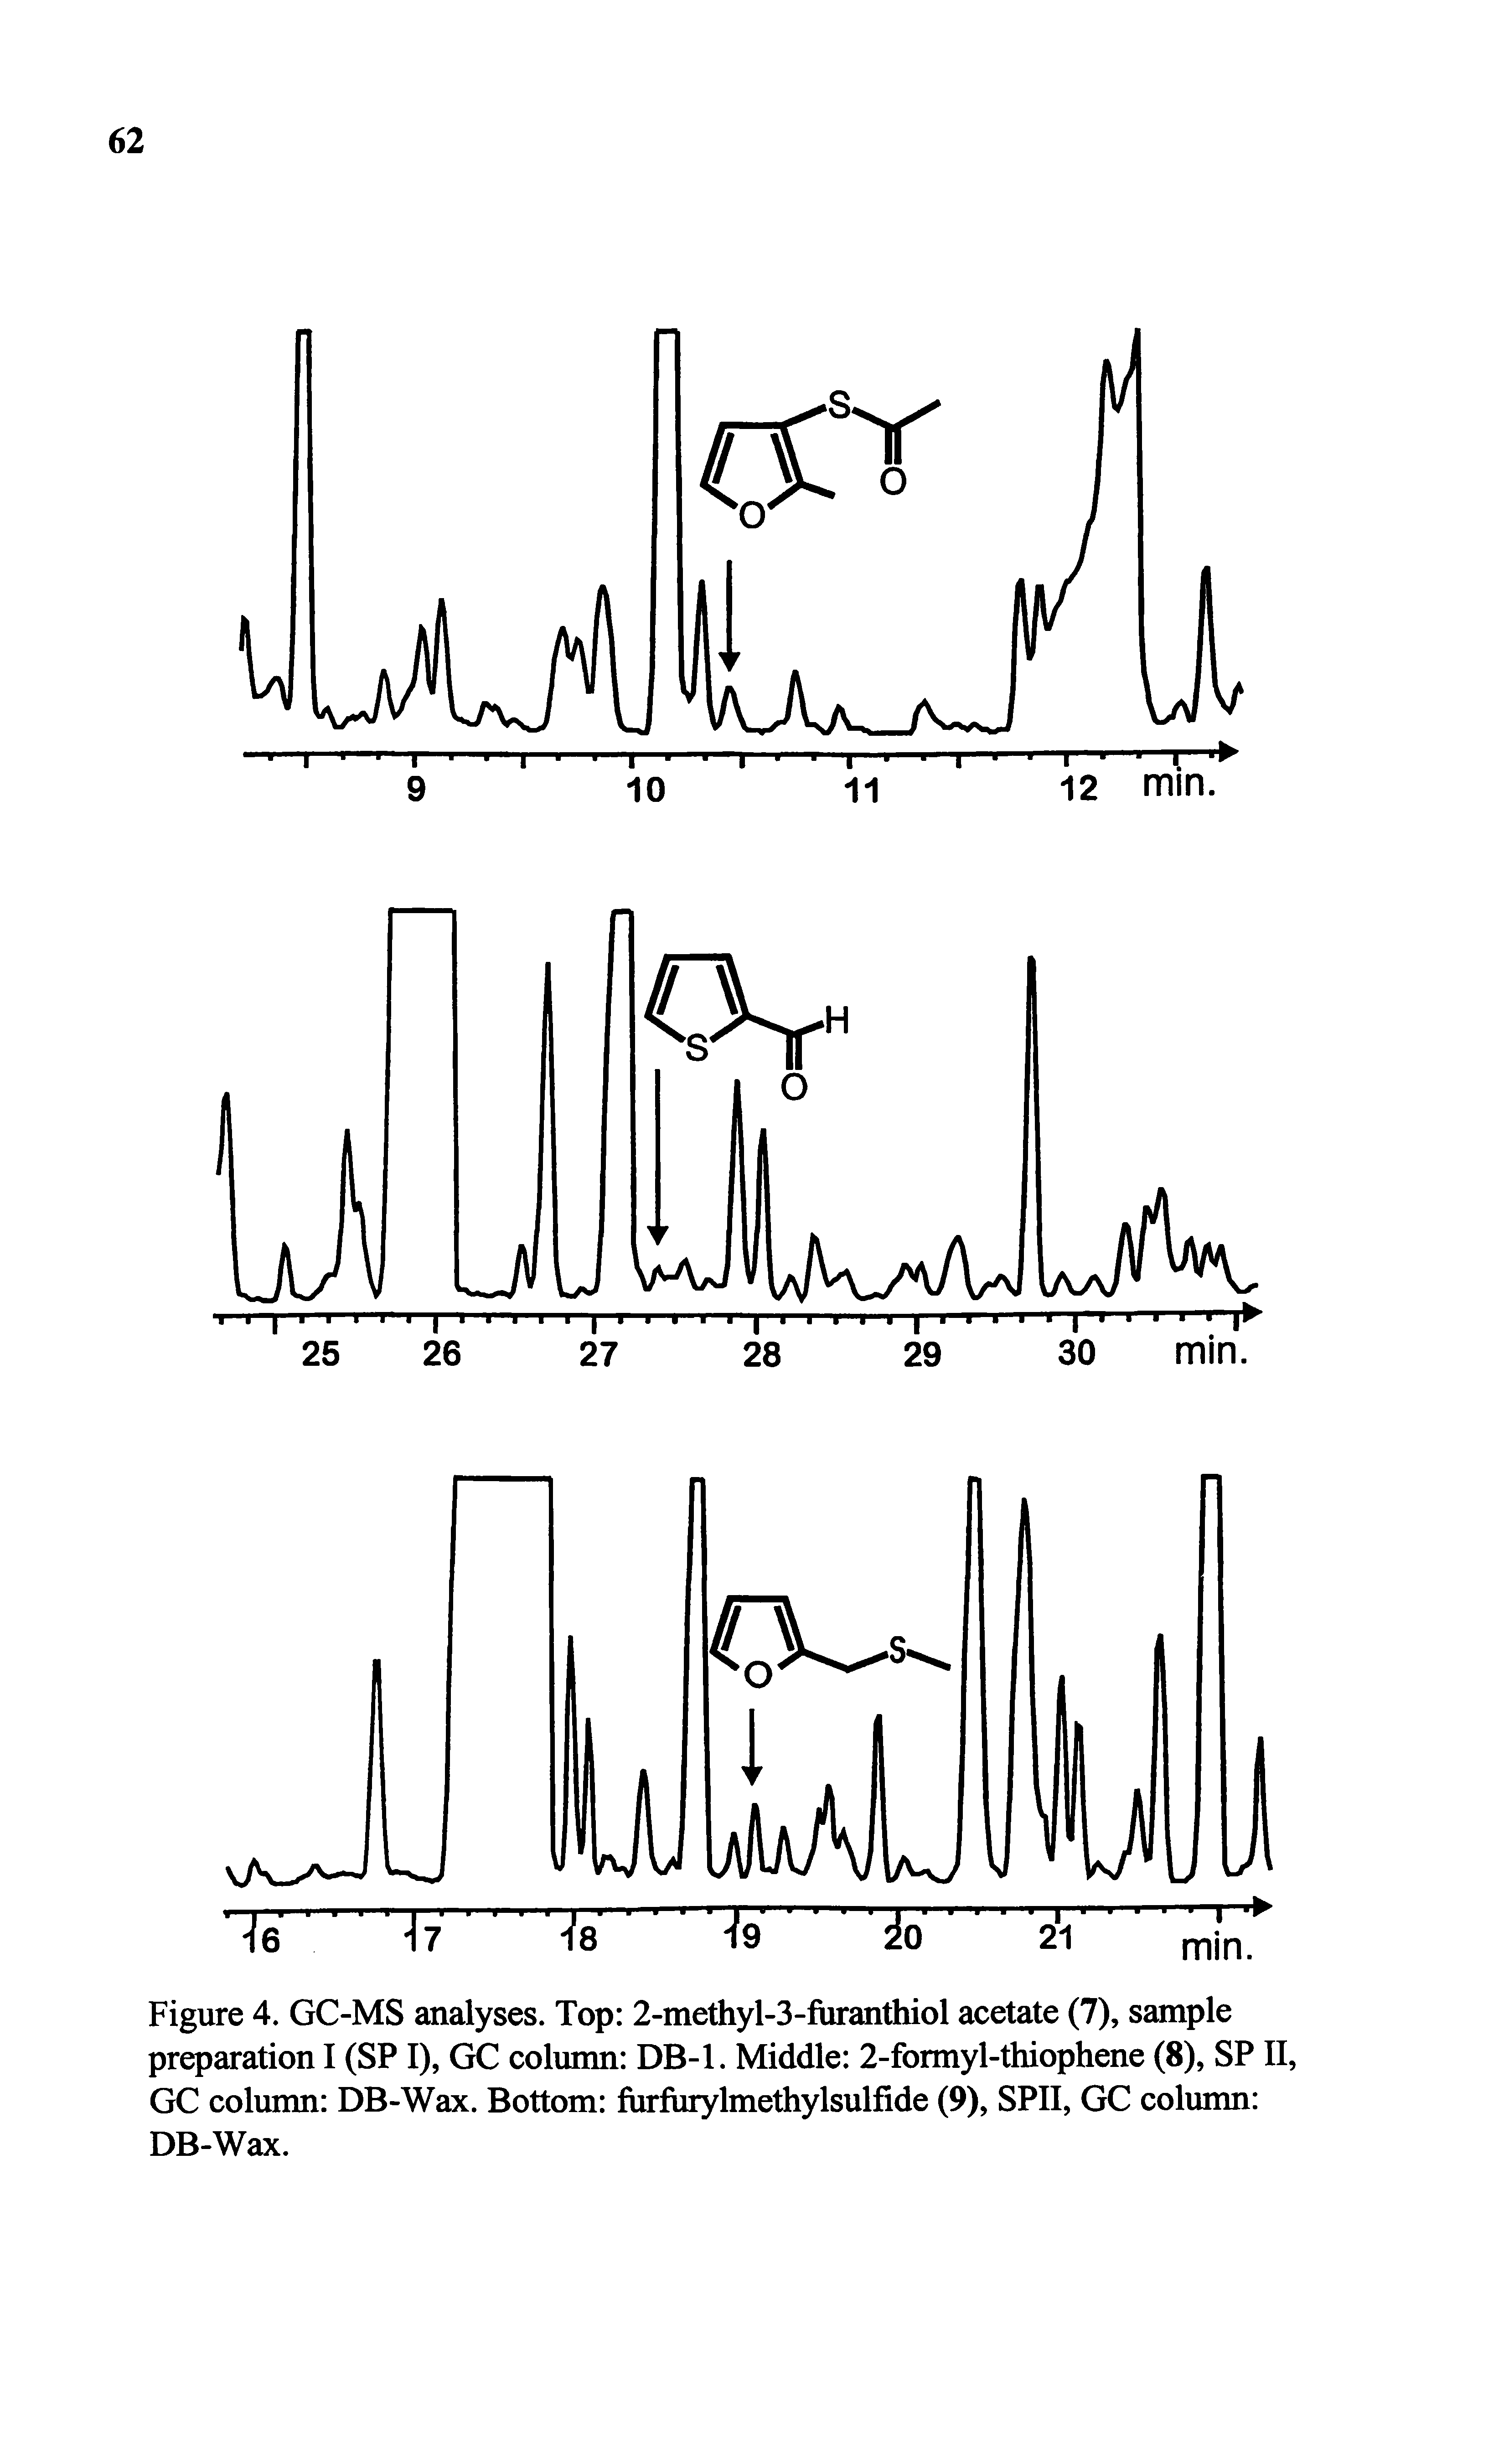 Figure 4. GC-MS analyses. Top 2-methyl-3-furanthiol acetate (7), sample preparation I (SP I), GC column DB-1. Middle 2-formyl-thiophene (8), SPII, GC column DB-Wax. Bottom fiirfurylmethylsulfide (9), SPII, GC column DB-Wax.